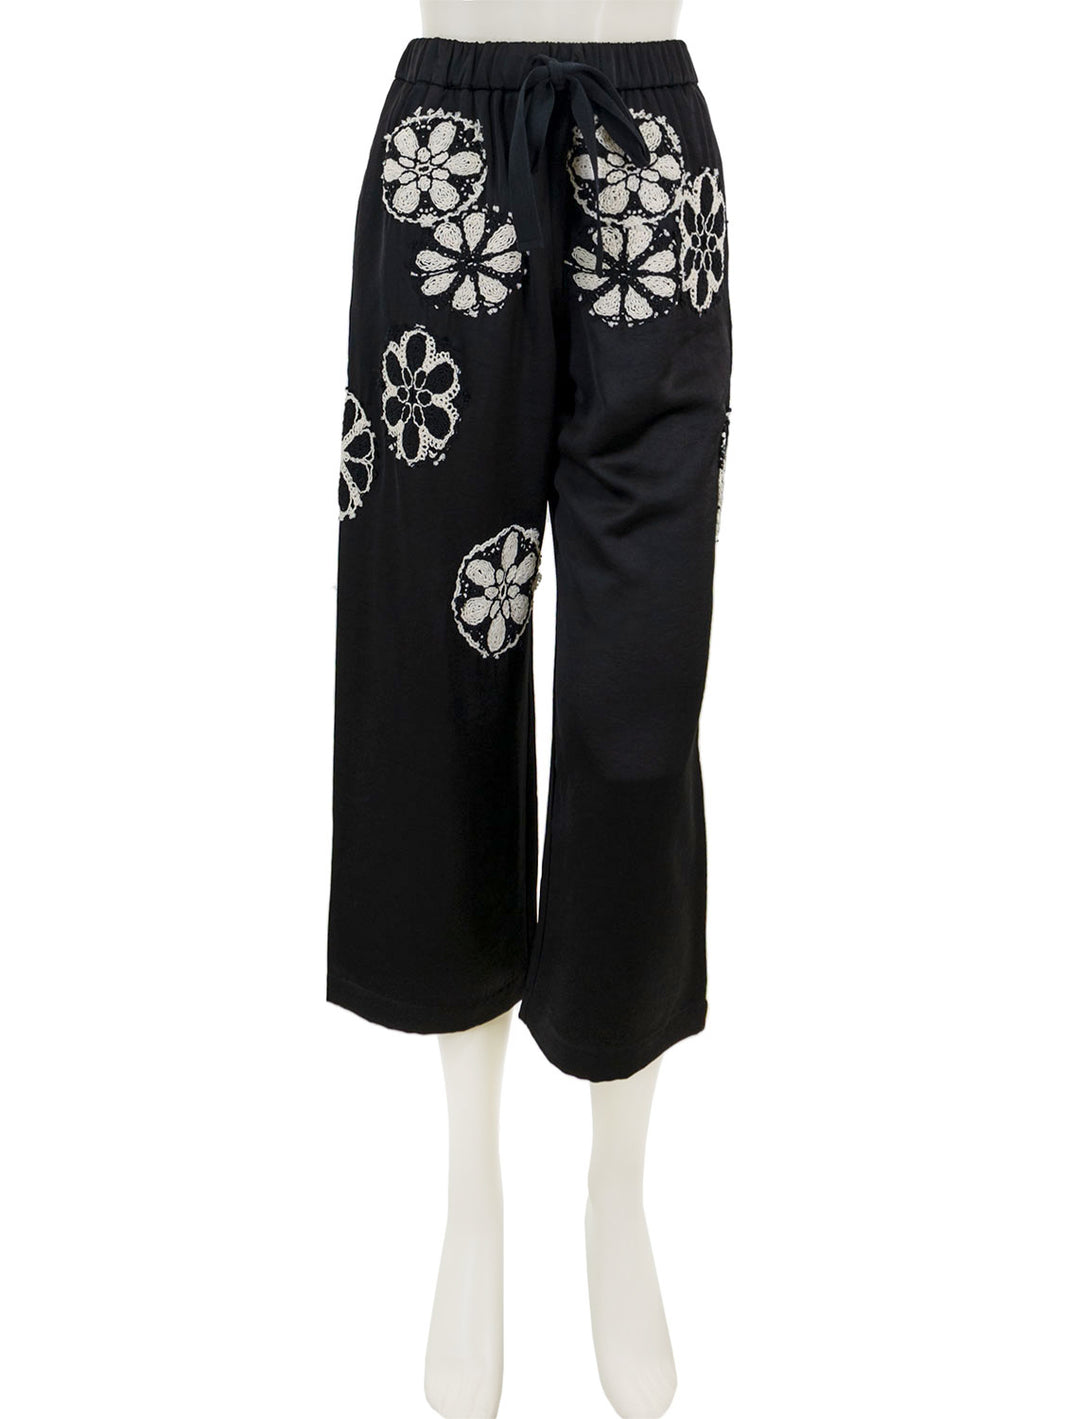 Front view of Saint Art's nova crochet pants in black and ivory.